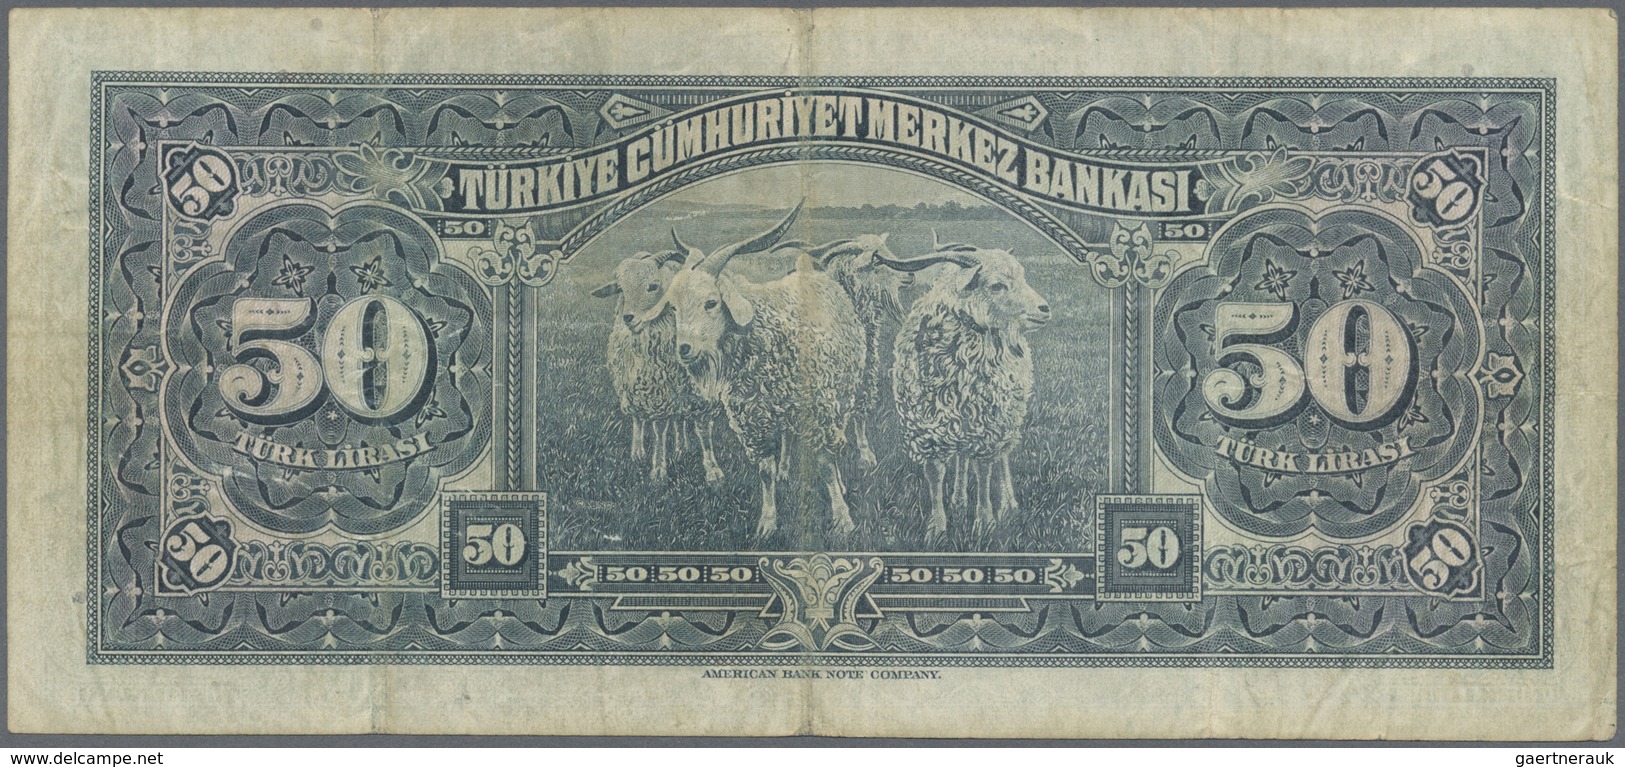 Turkey / Türkei: 50 Lirasi L. 1930 (1942-1947) "İnönü" - 3rd Issue, P.143, Still A Nice Note With So - Turquie